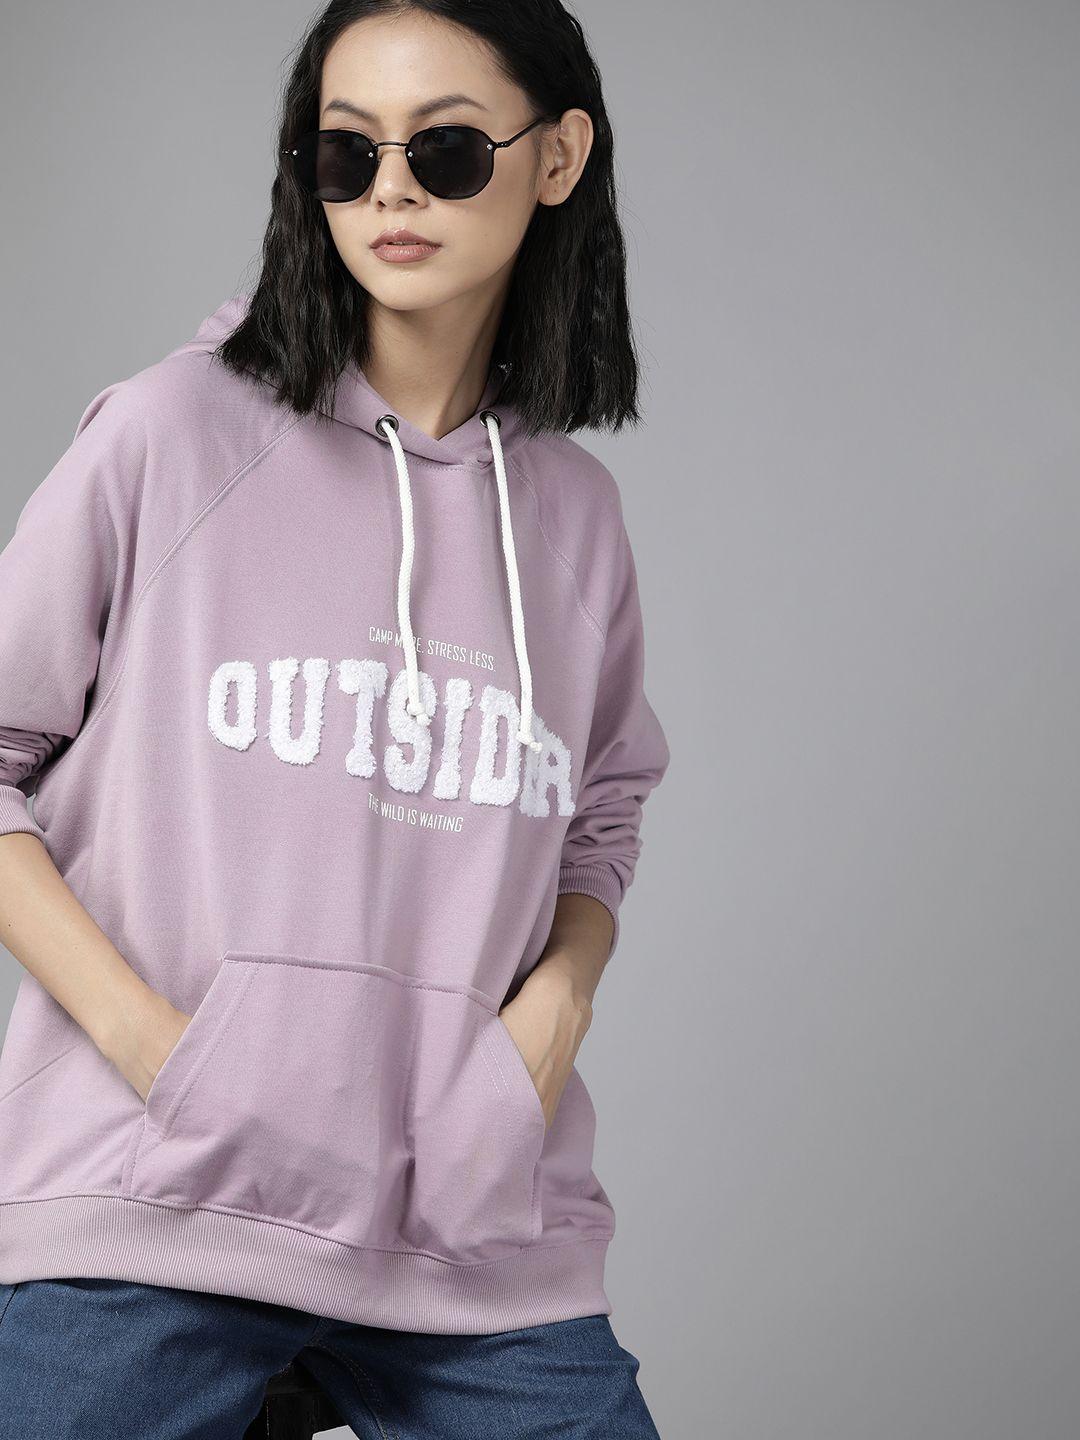 the roadster lifestyle co. women lavender applique hooded sweatshirt